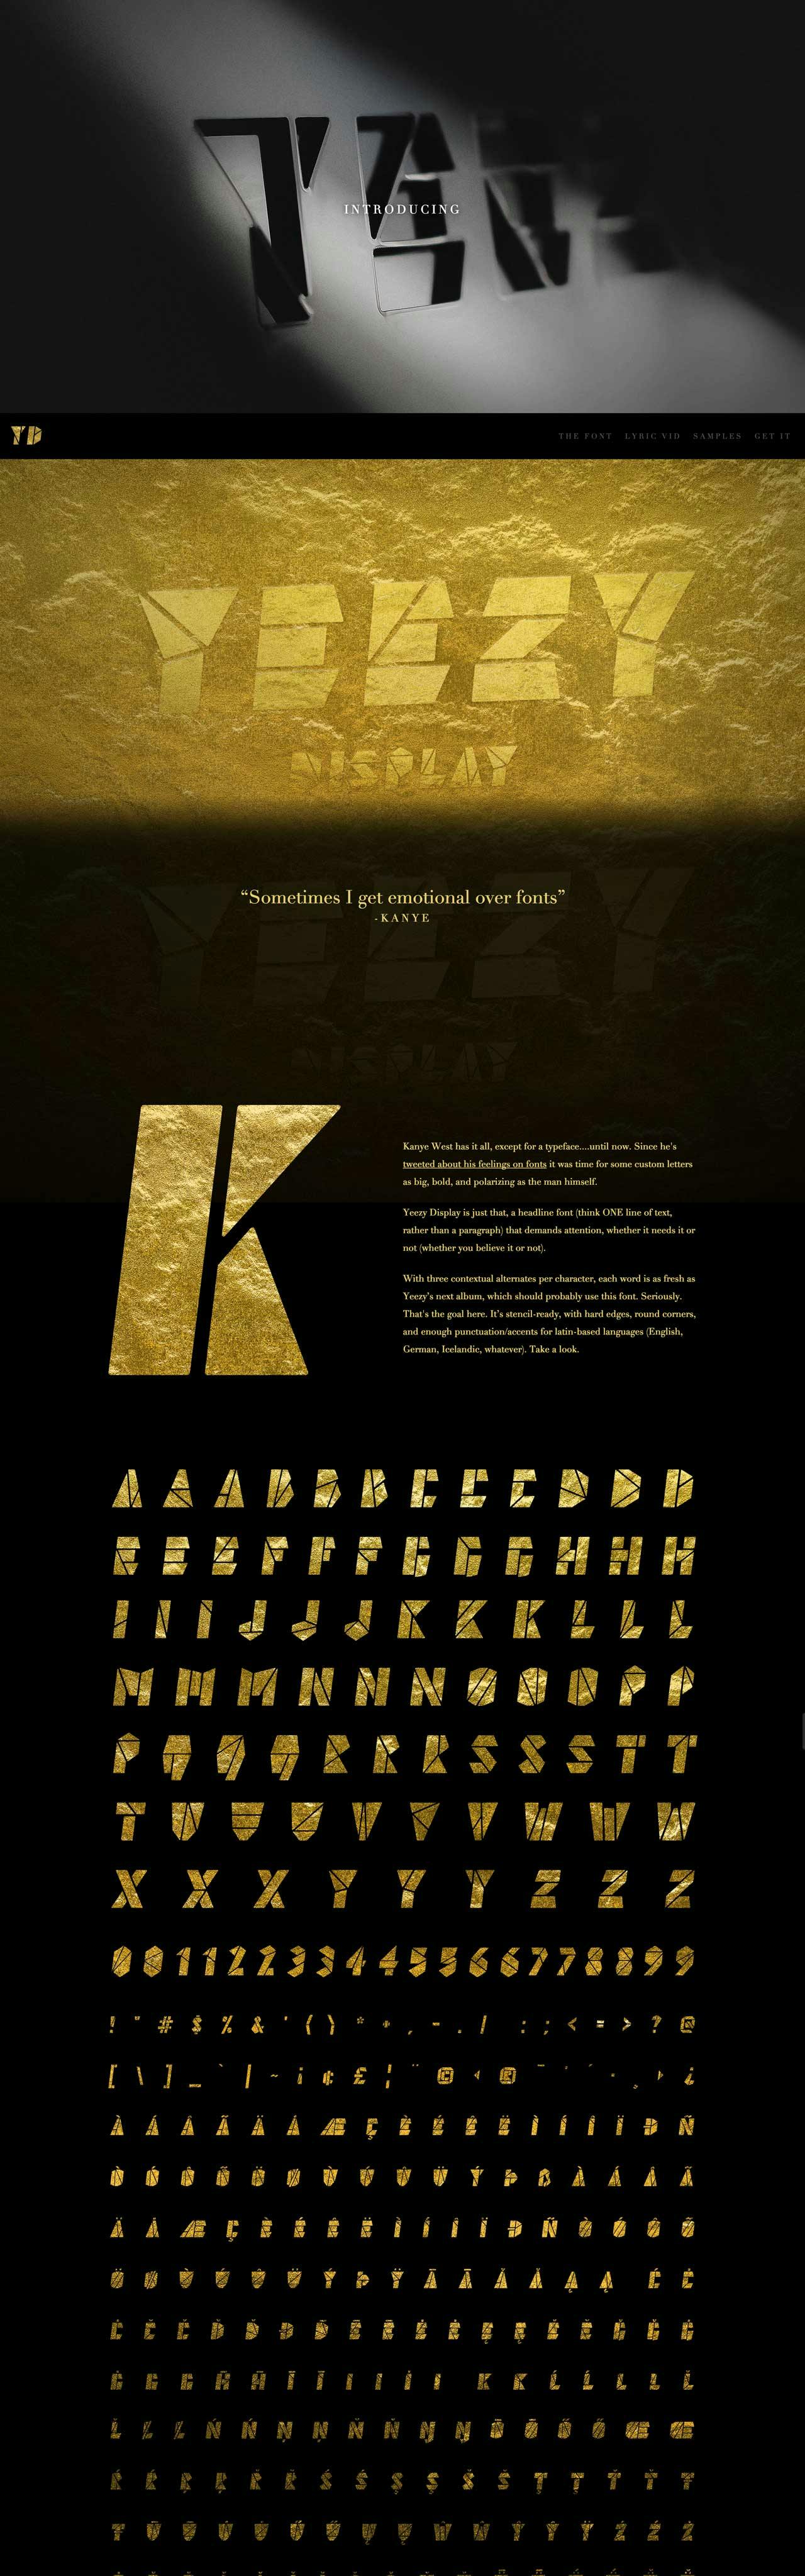 Yeezy Display – The (unofficial) Kanye Font Website Screenshot